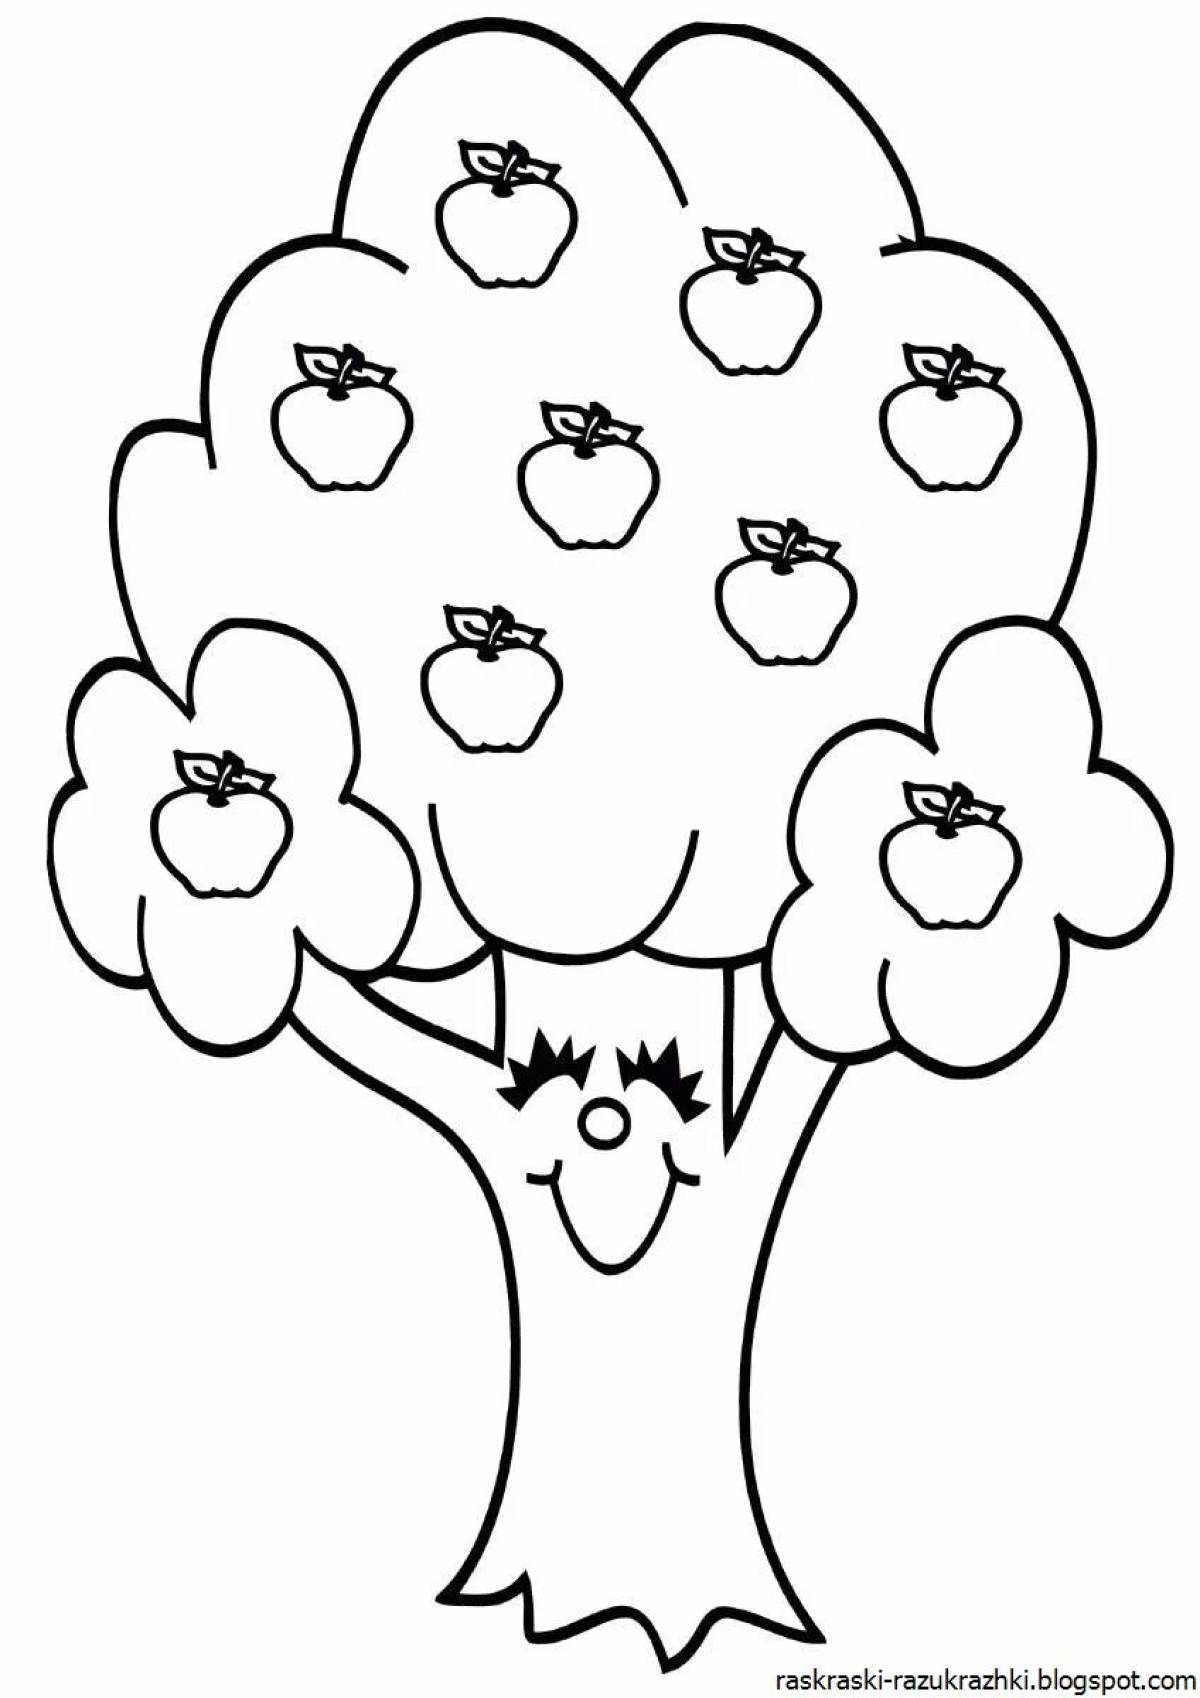 Раскраска буйная яблоня для детей